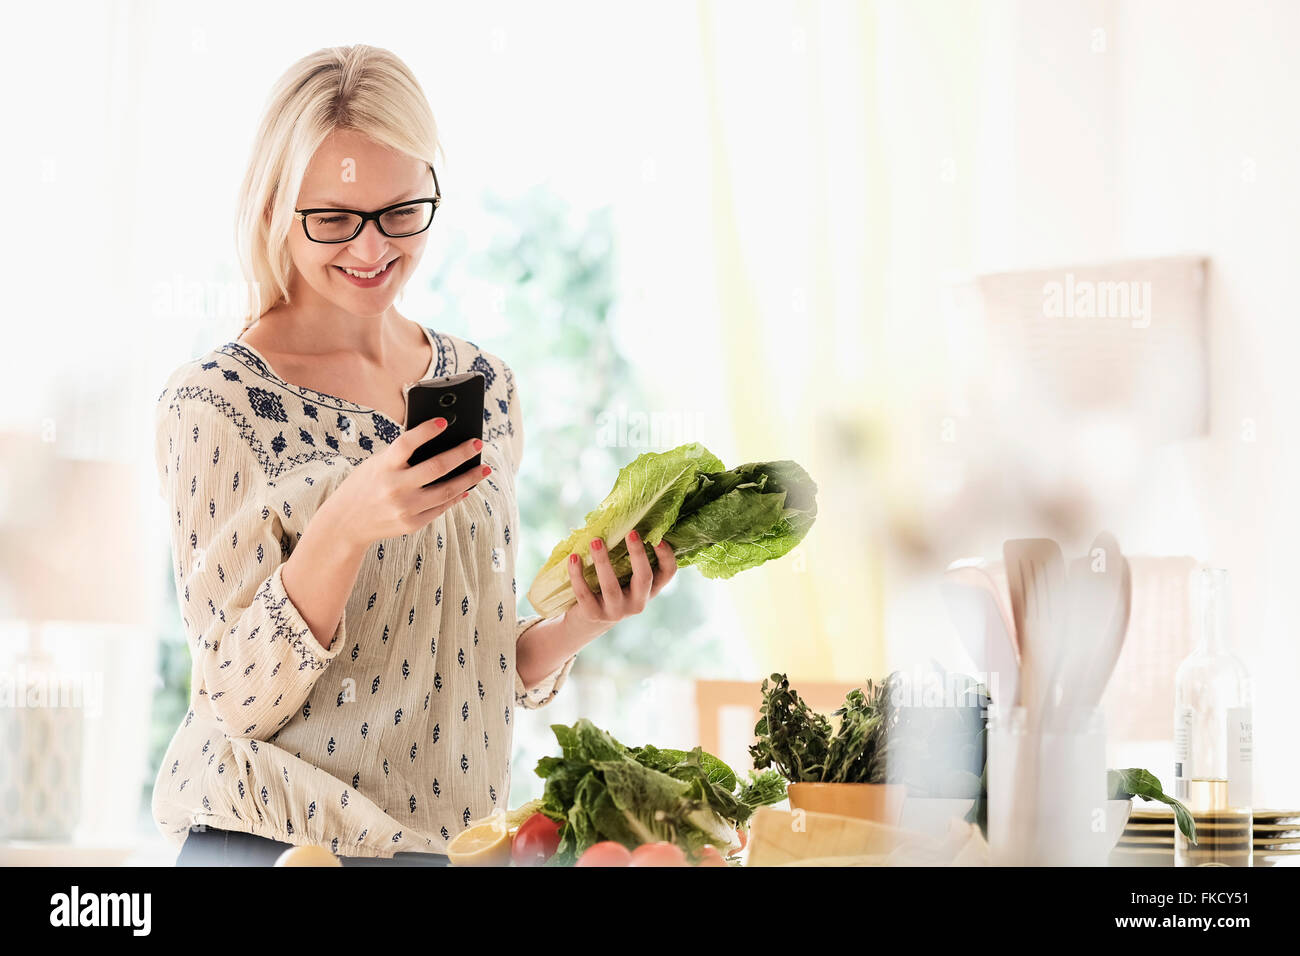 Woman preparing food and using phone Stock Photo